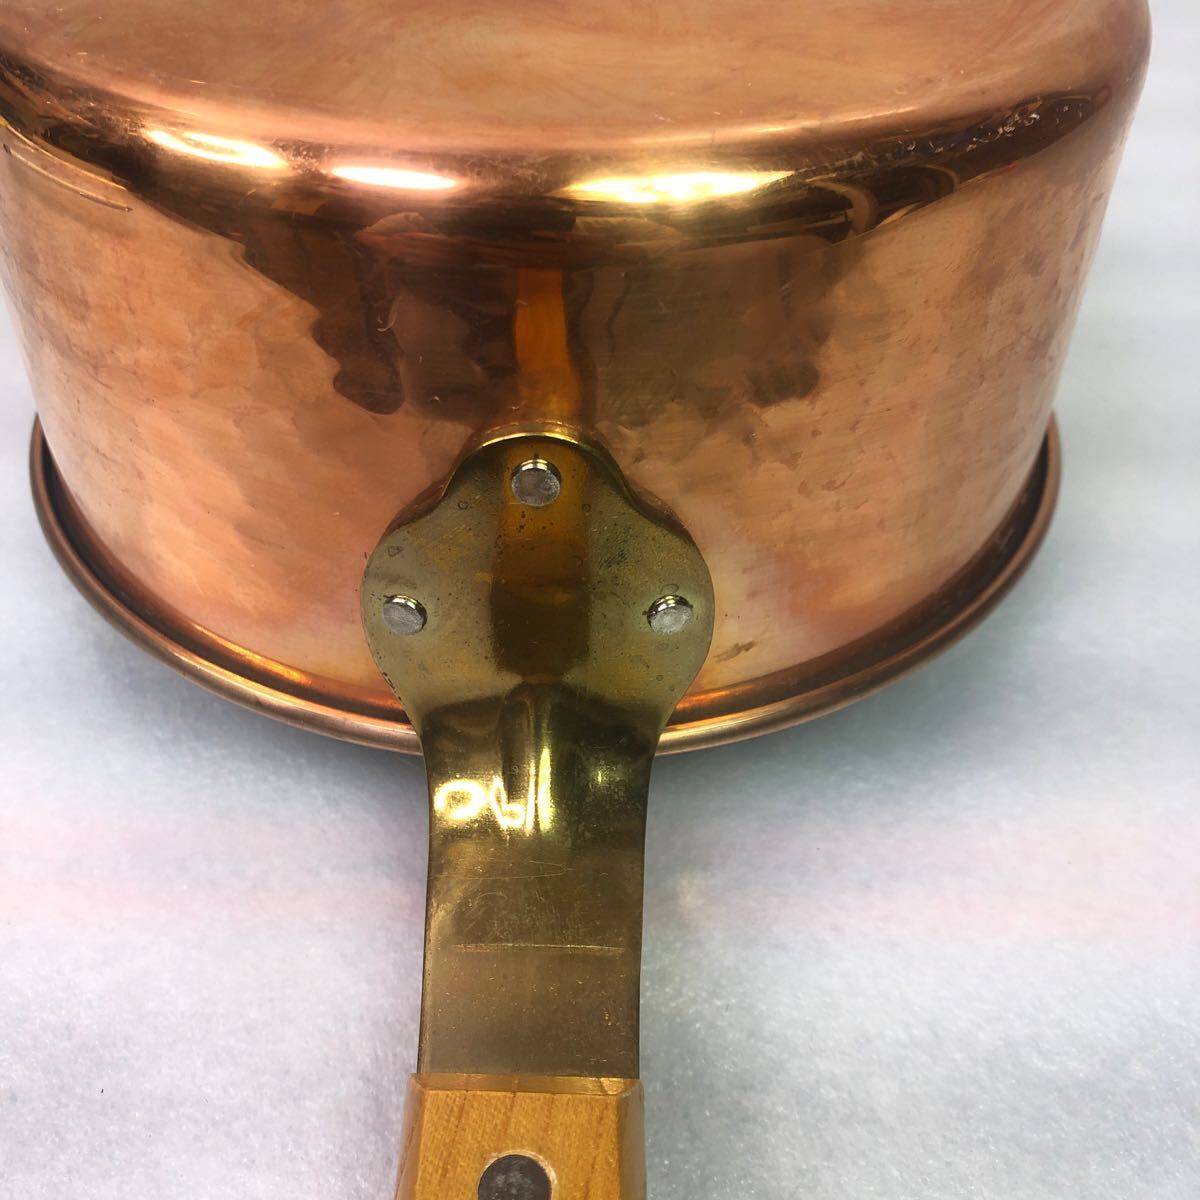  single-handled pot copper made 17 cm